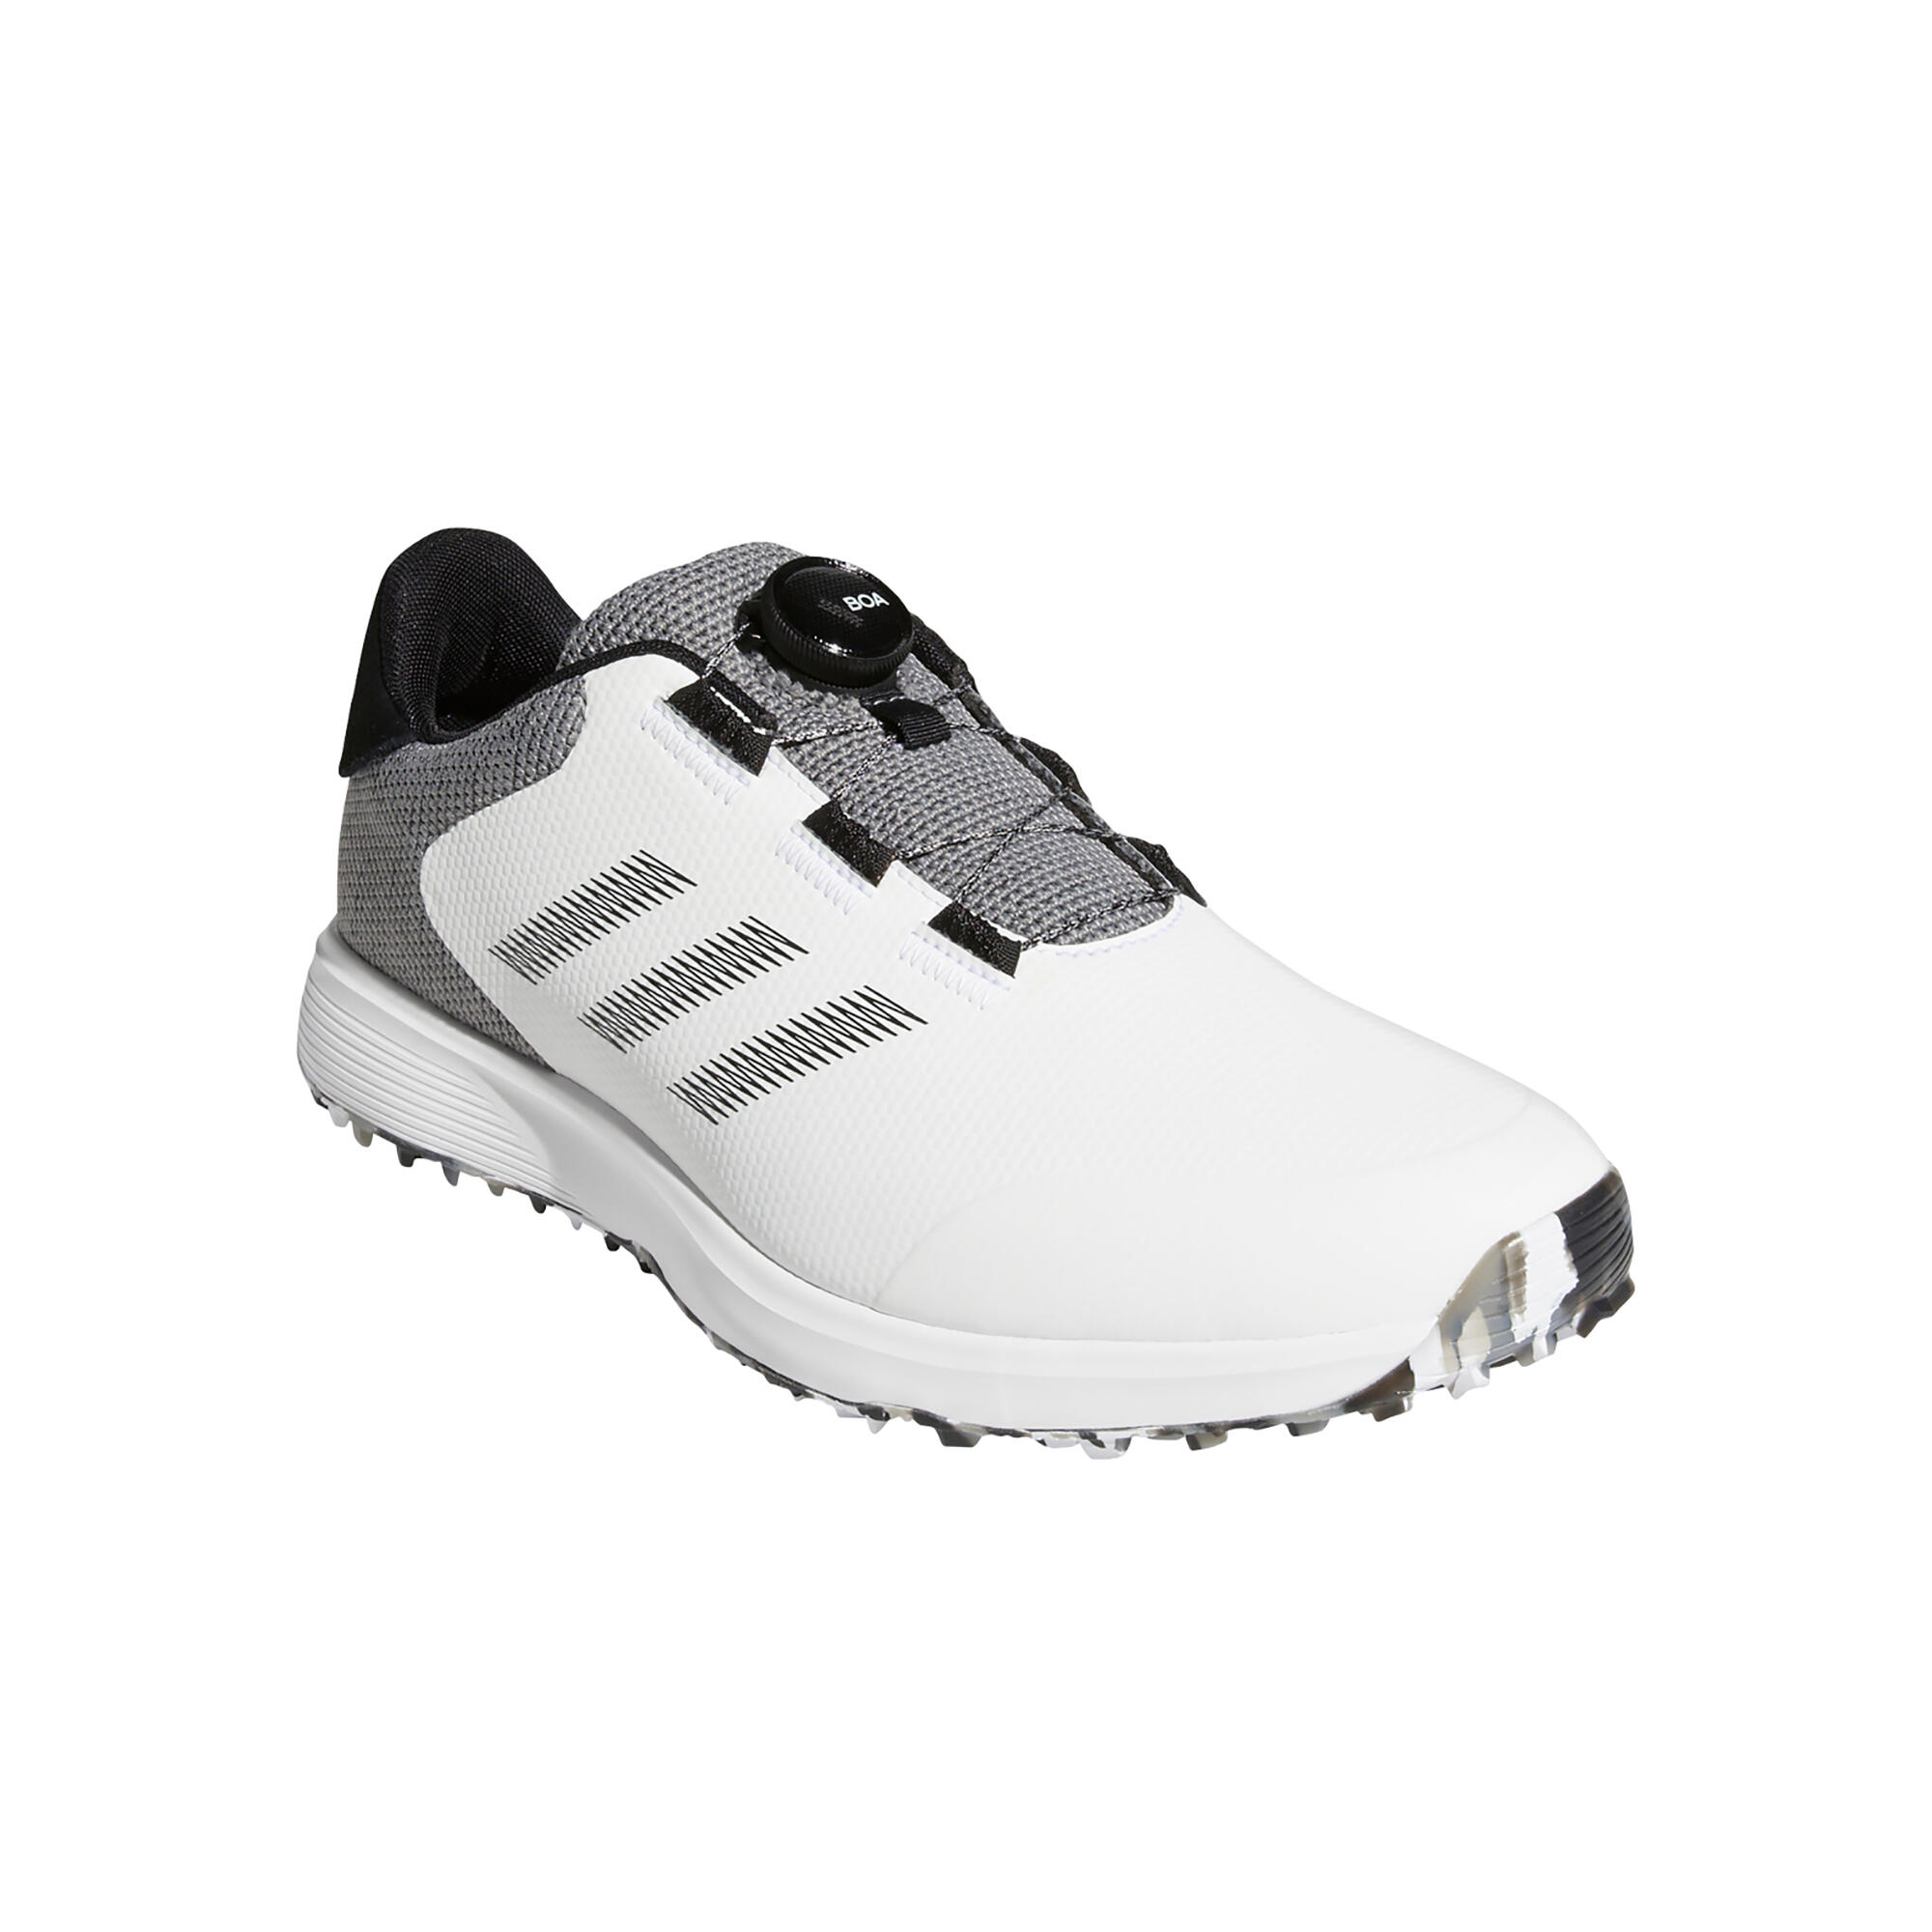 Men’s Waterproof Golf Shoes S2G SLBOA white 1/7